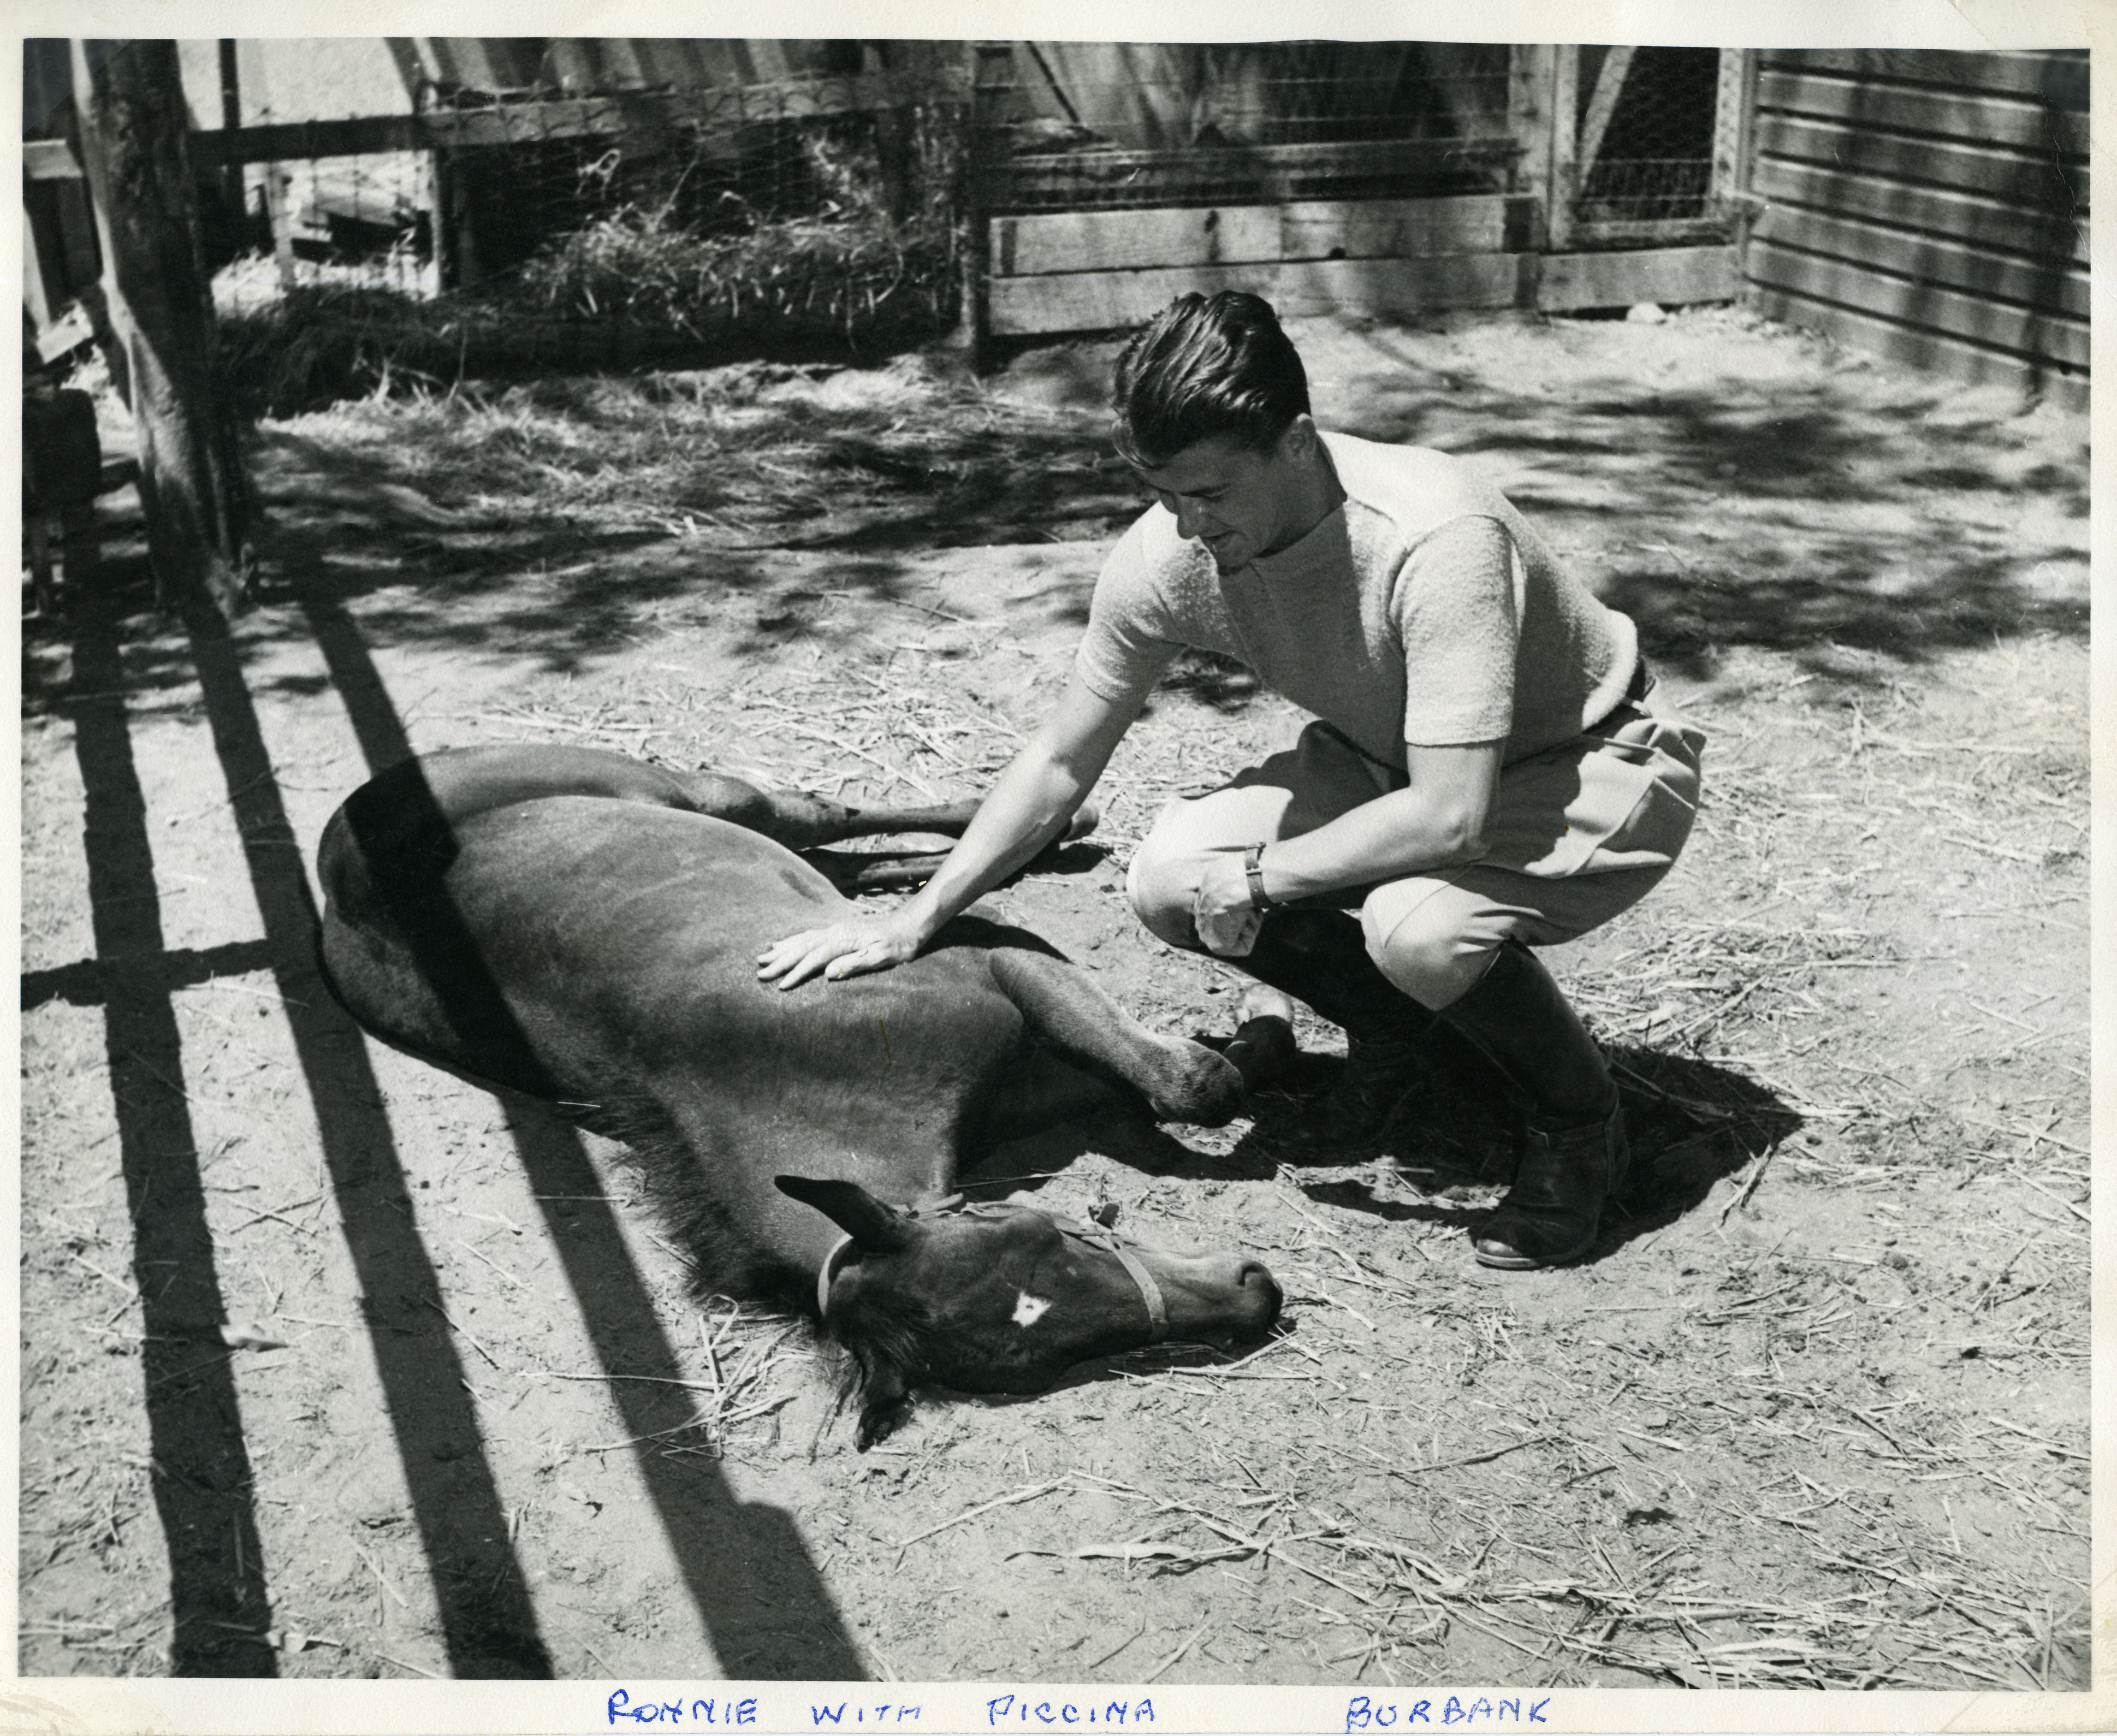 Ronald Reagan with Colt, young horse “Piccina” at Burbank